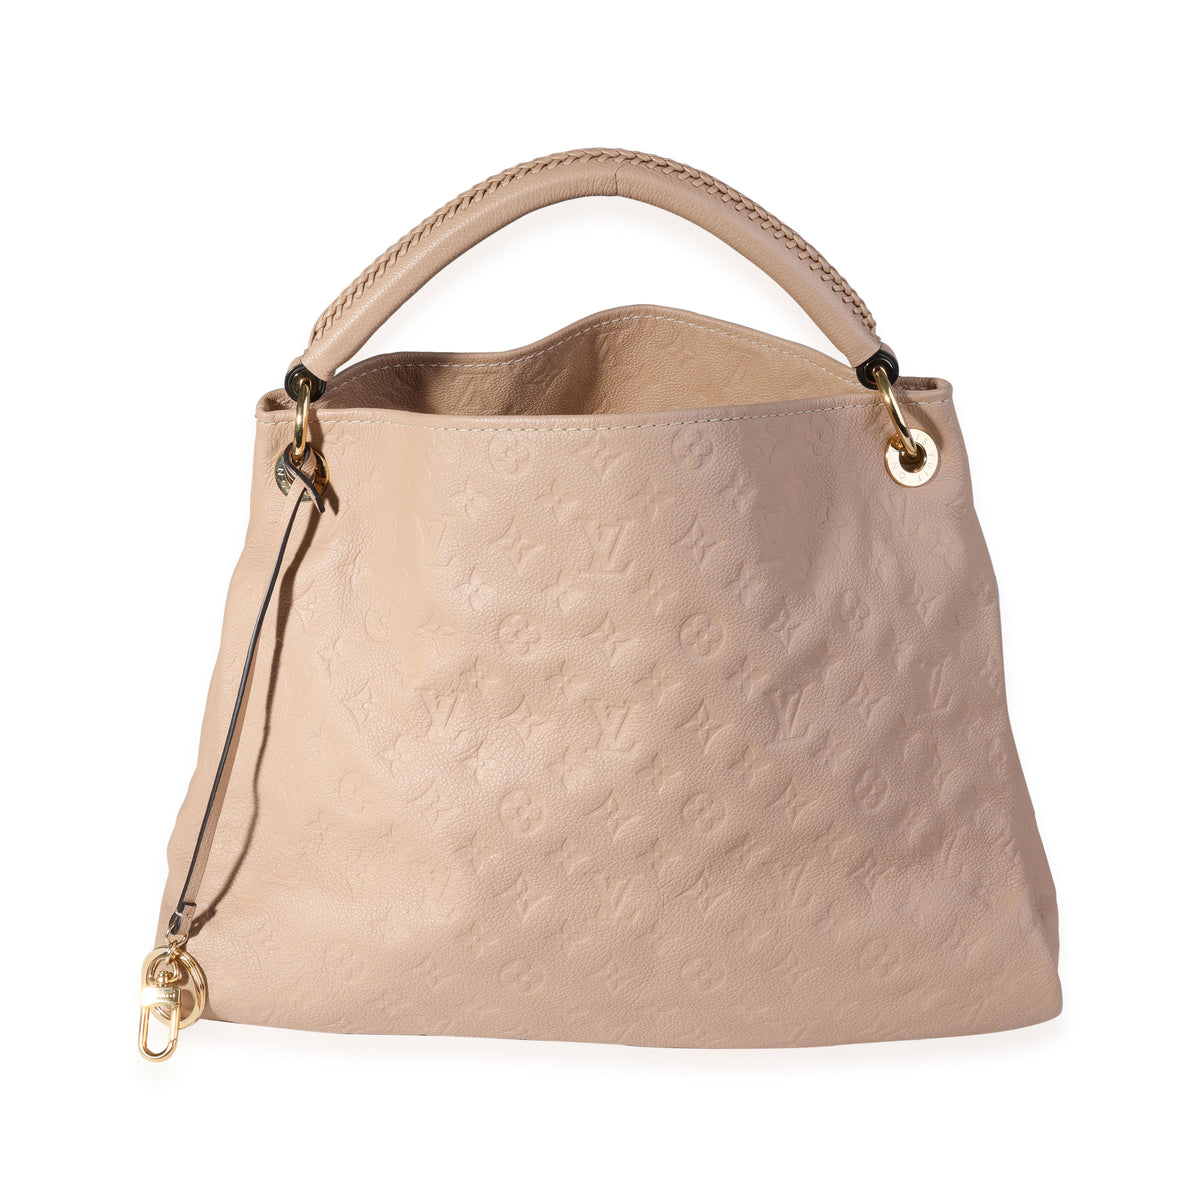 Louis Vuitton - Authenticated Handbag - Plastic Blue for Women, Very Good Condition